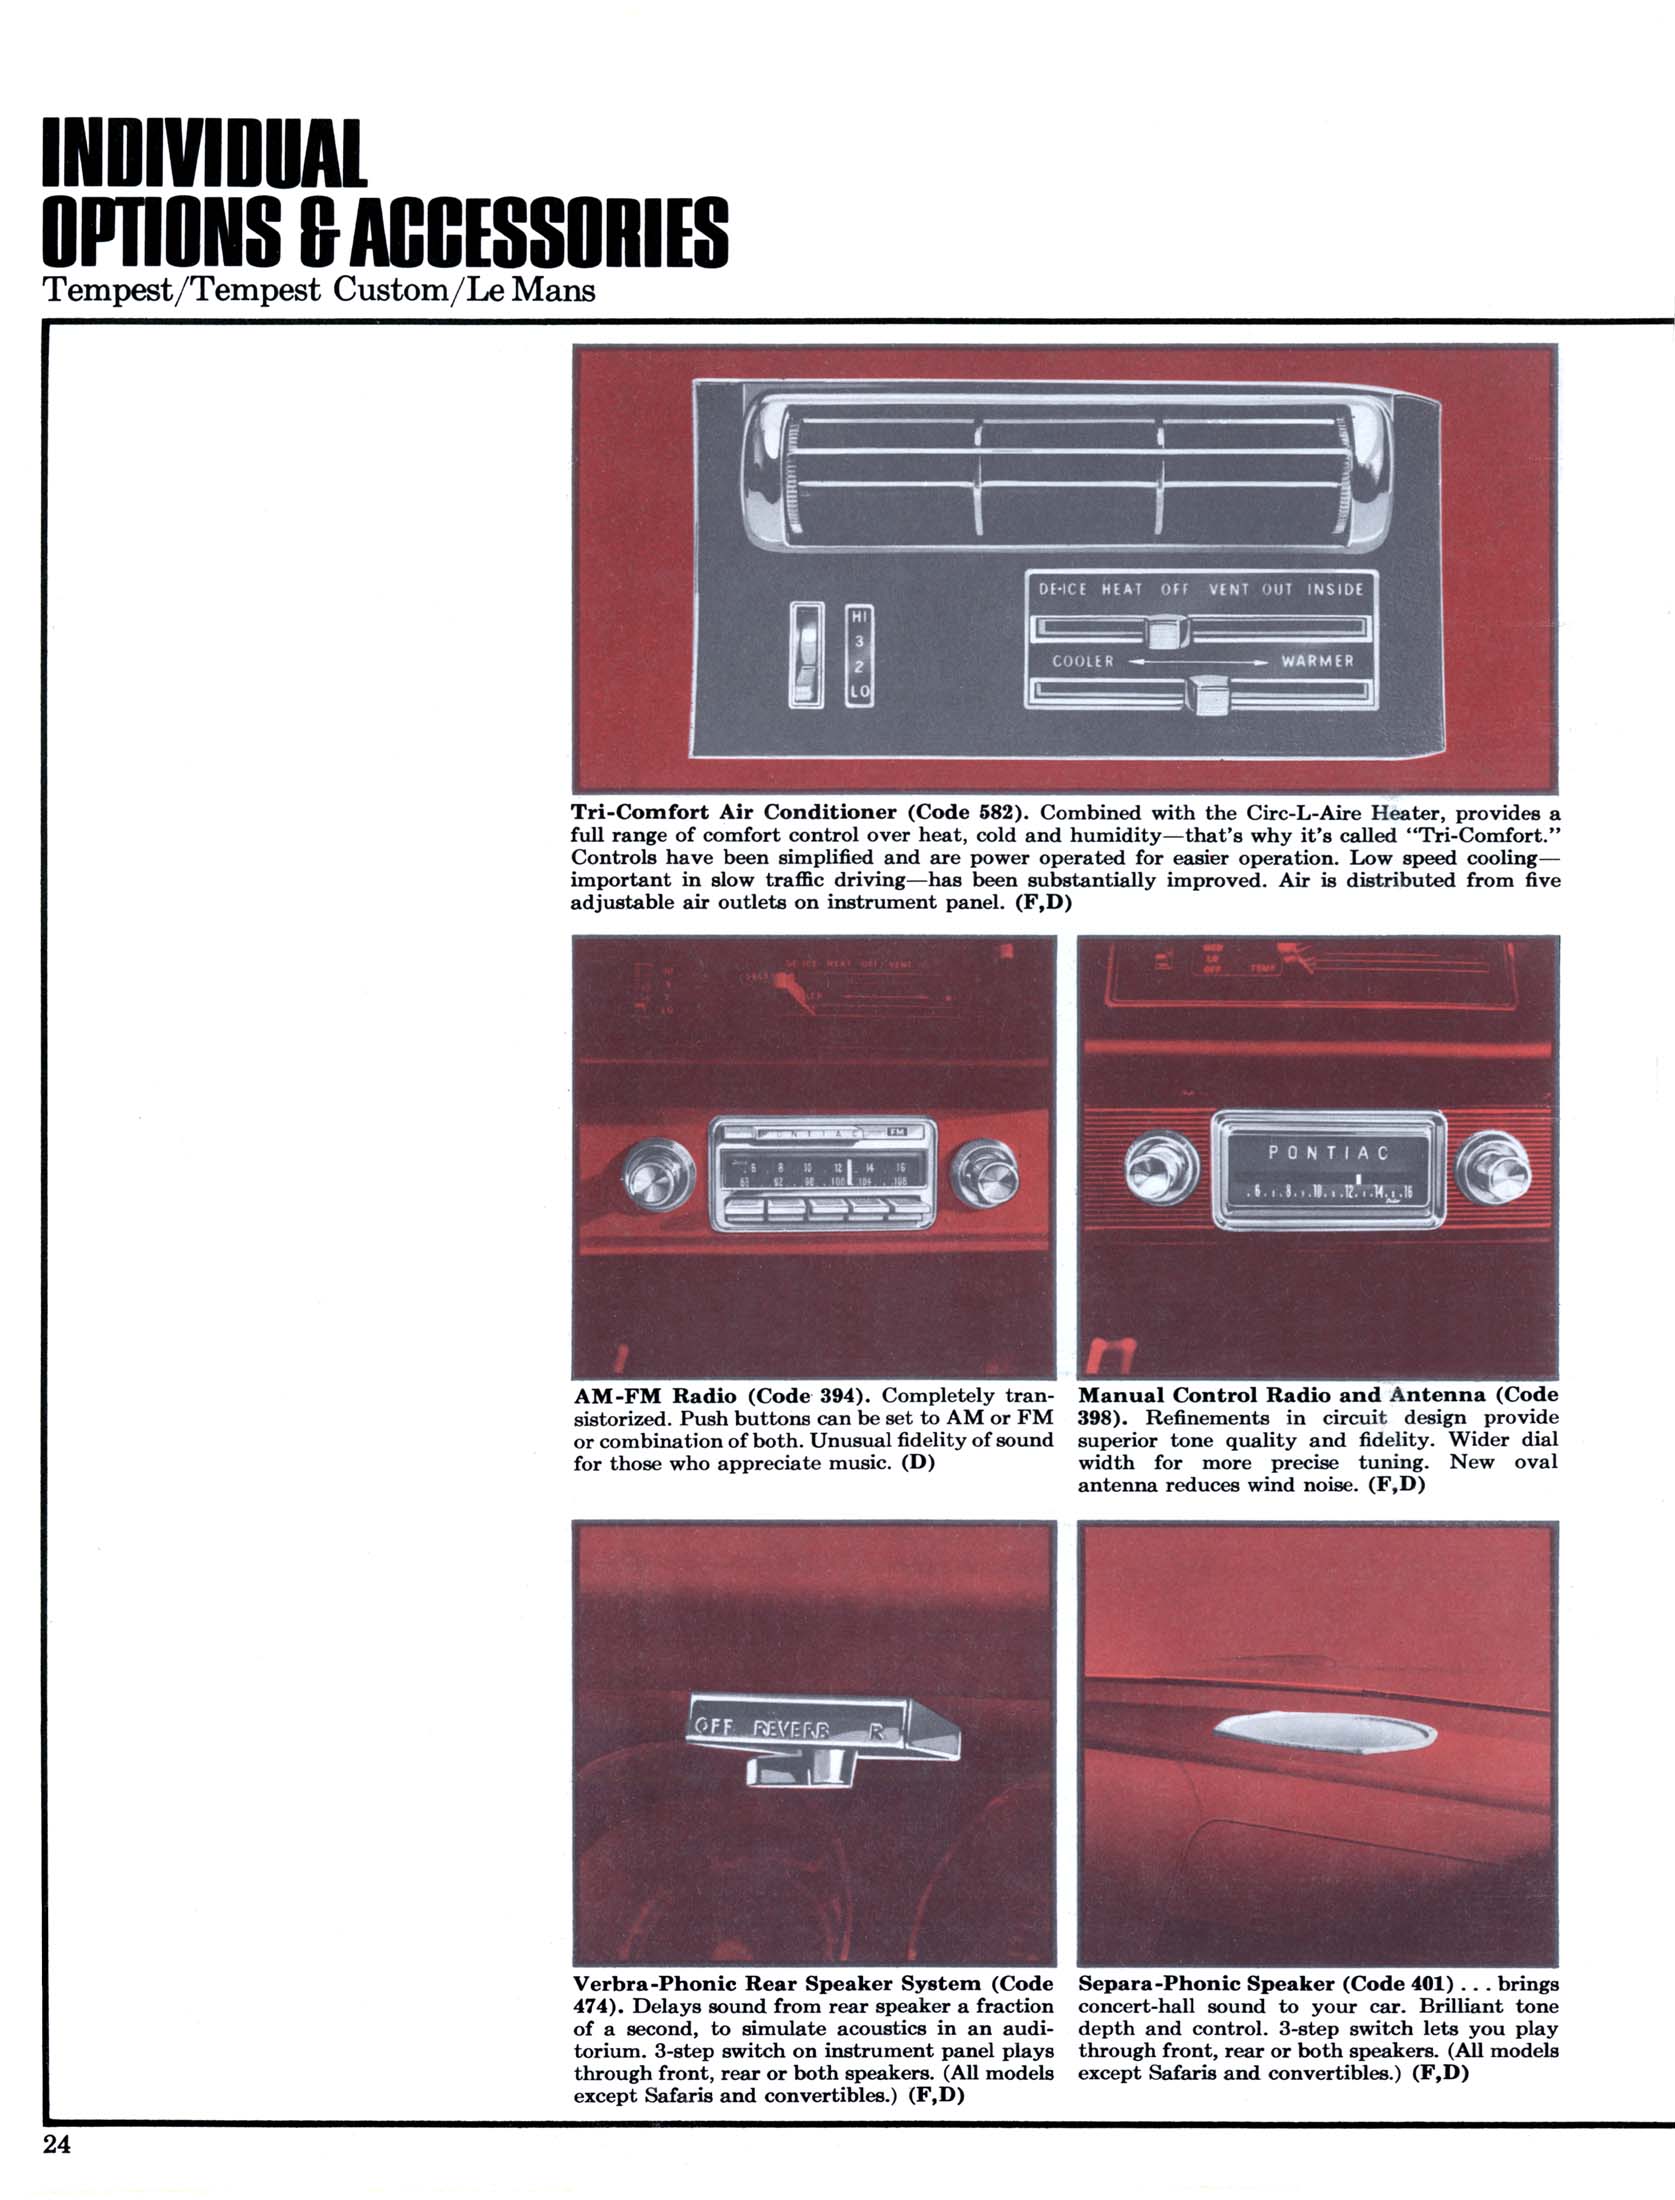 1965_Pontiac_Accessories_Catalog-24